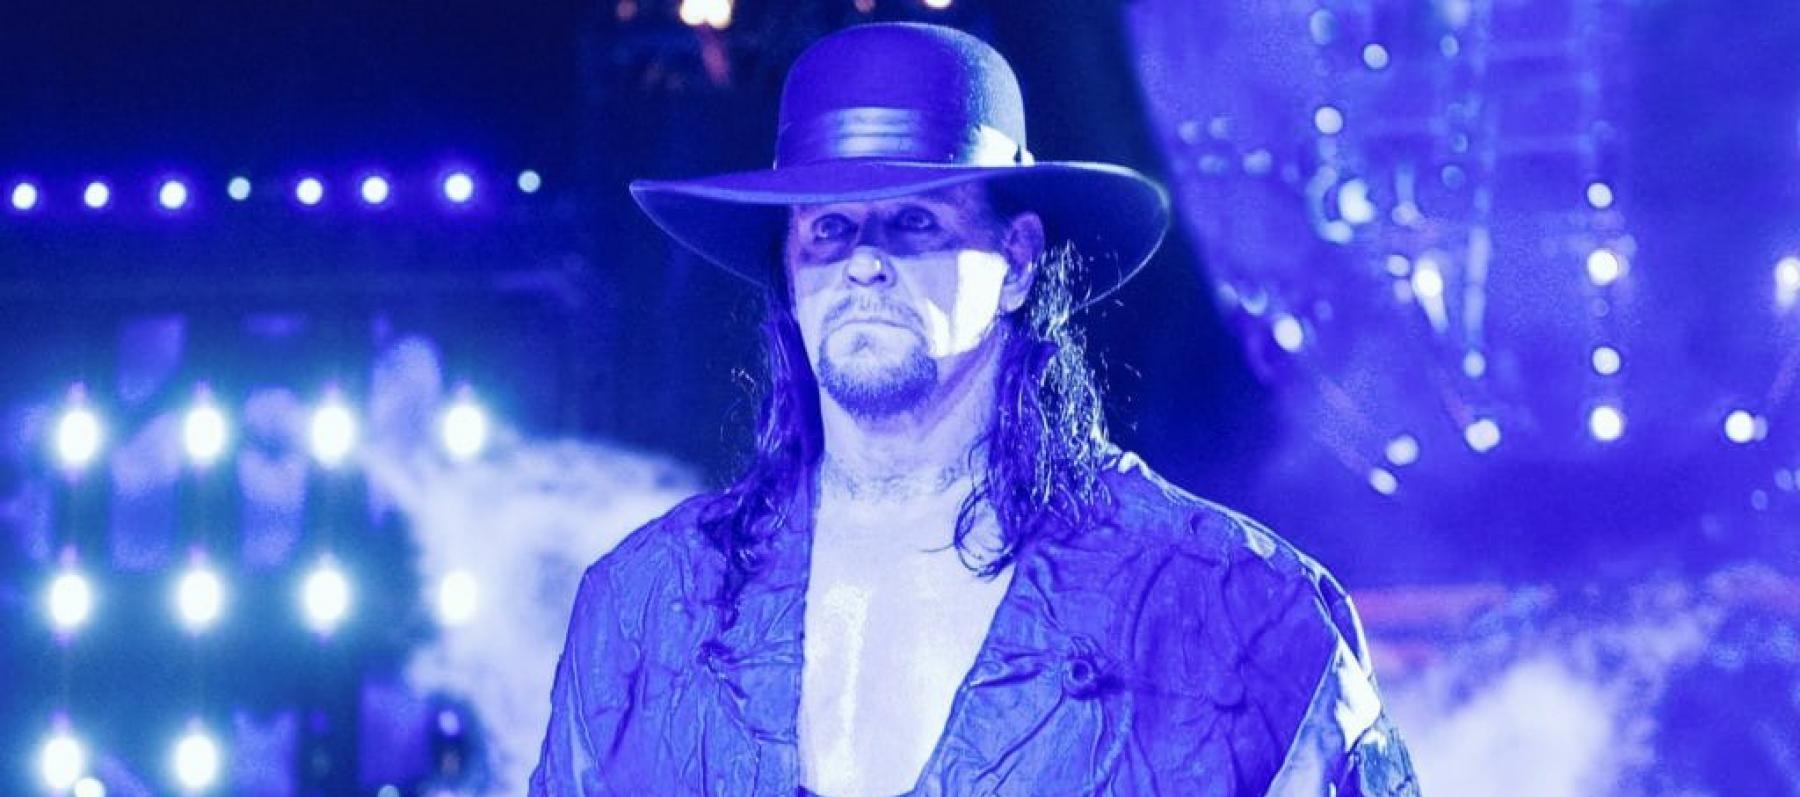 الملاكم اندرتيكر The Undertaker ويكيبيديا 